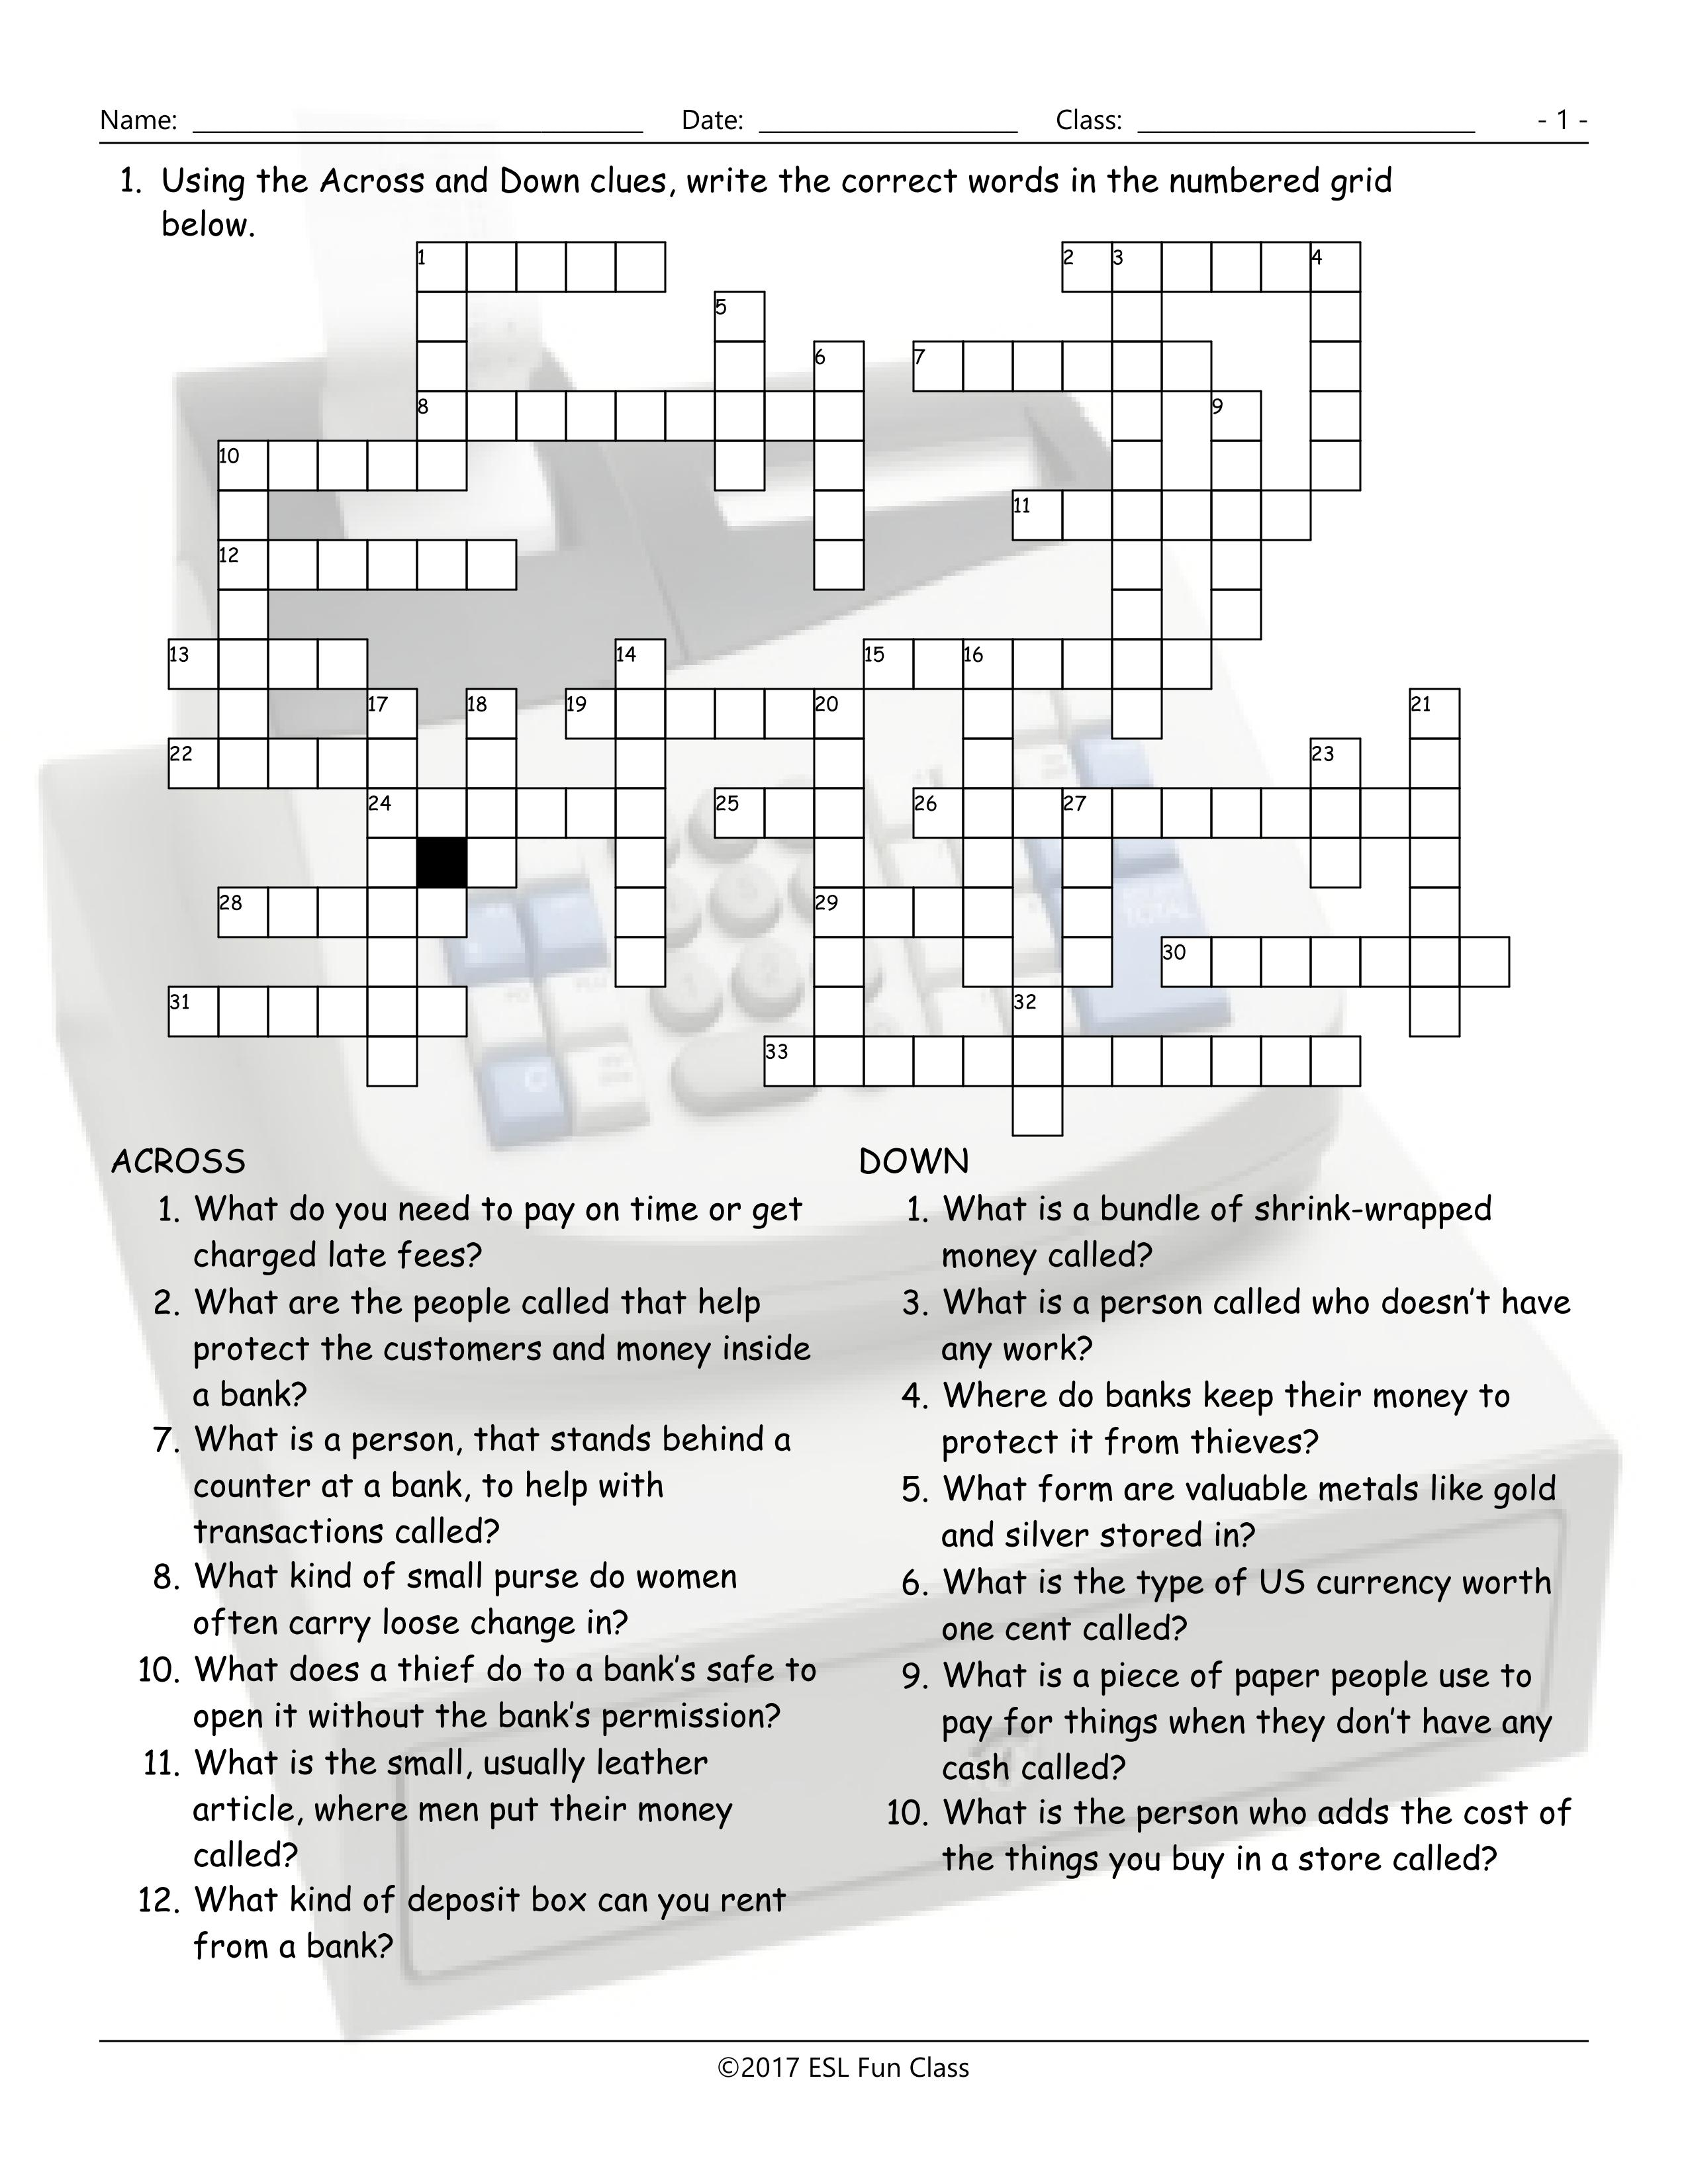 Money-Banking Crossword Puzzle Worksheet-Esl Fun Games-Have Fun! - Printable Esl Crossword Puzzles